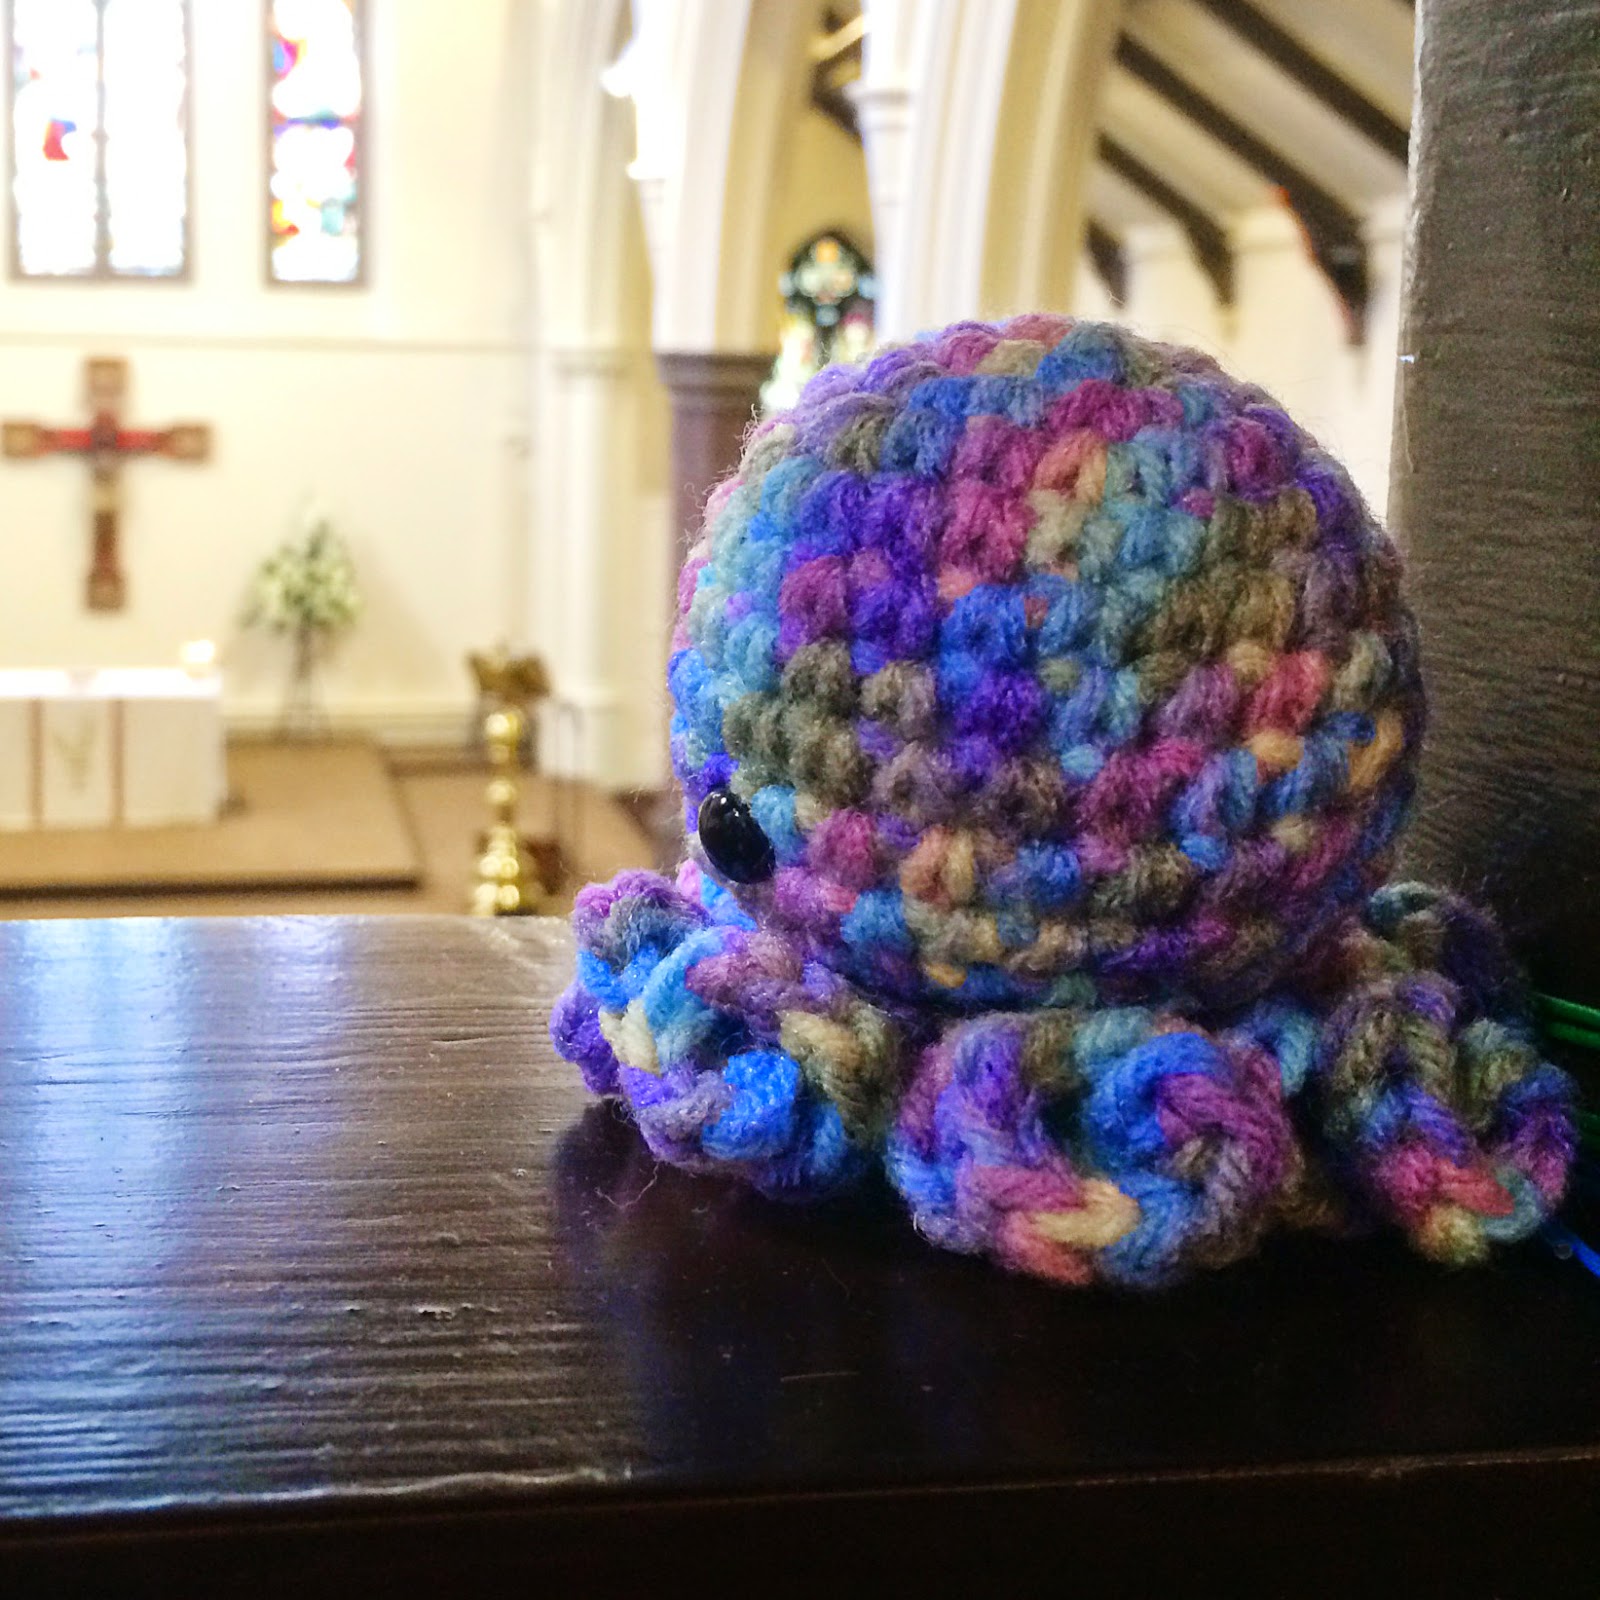 octopus amigurumi at church